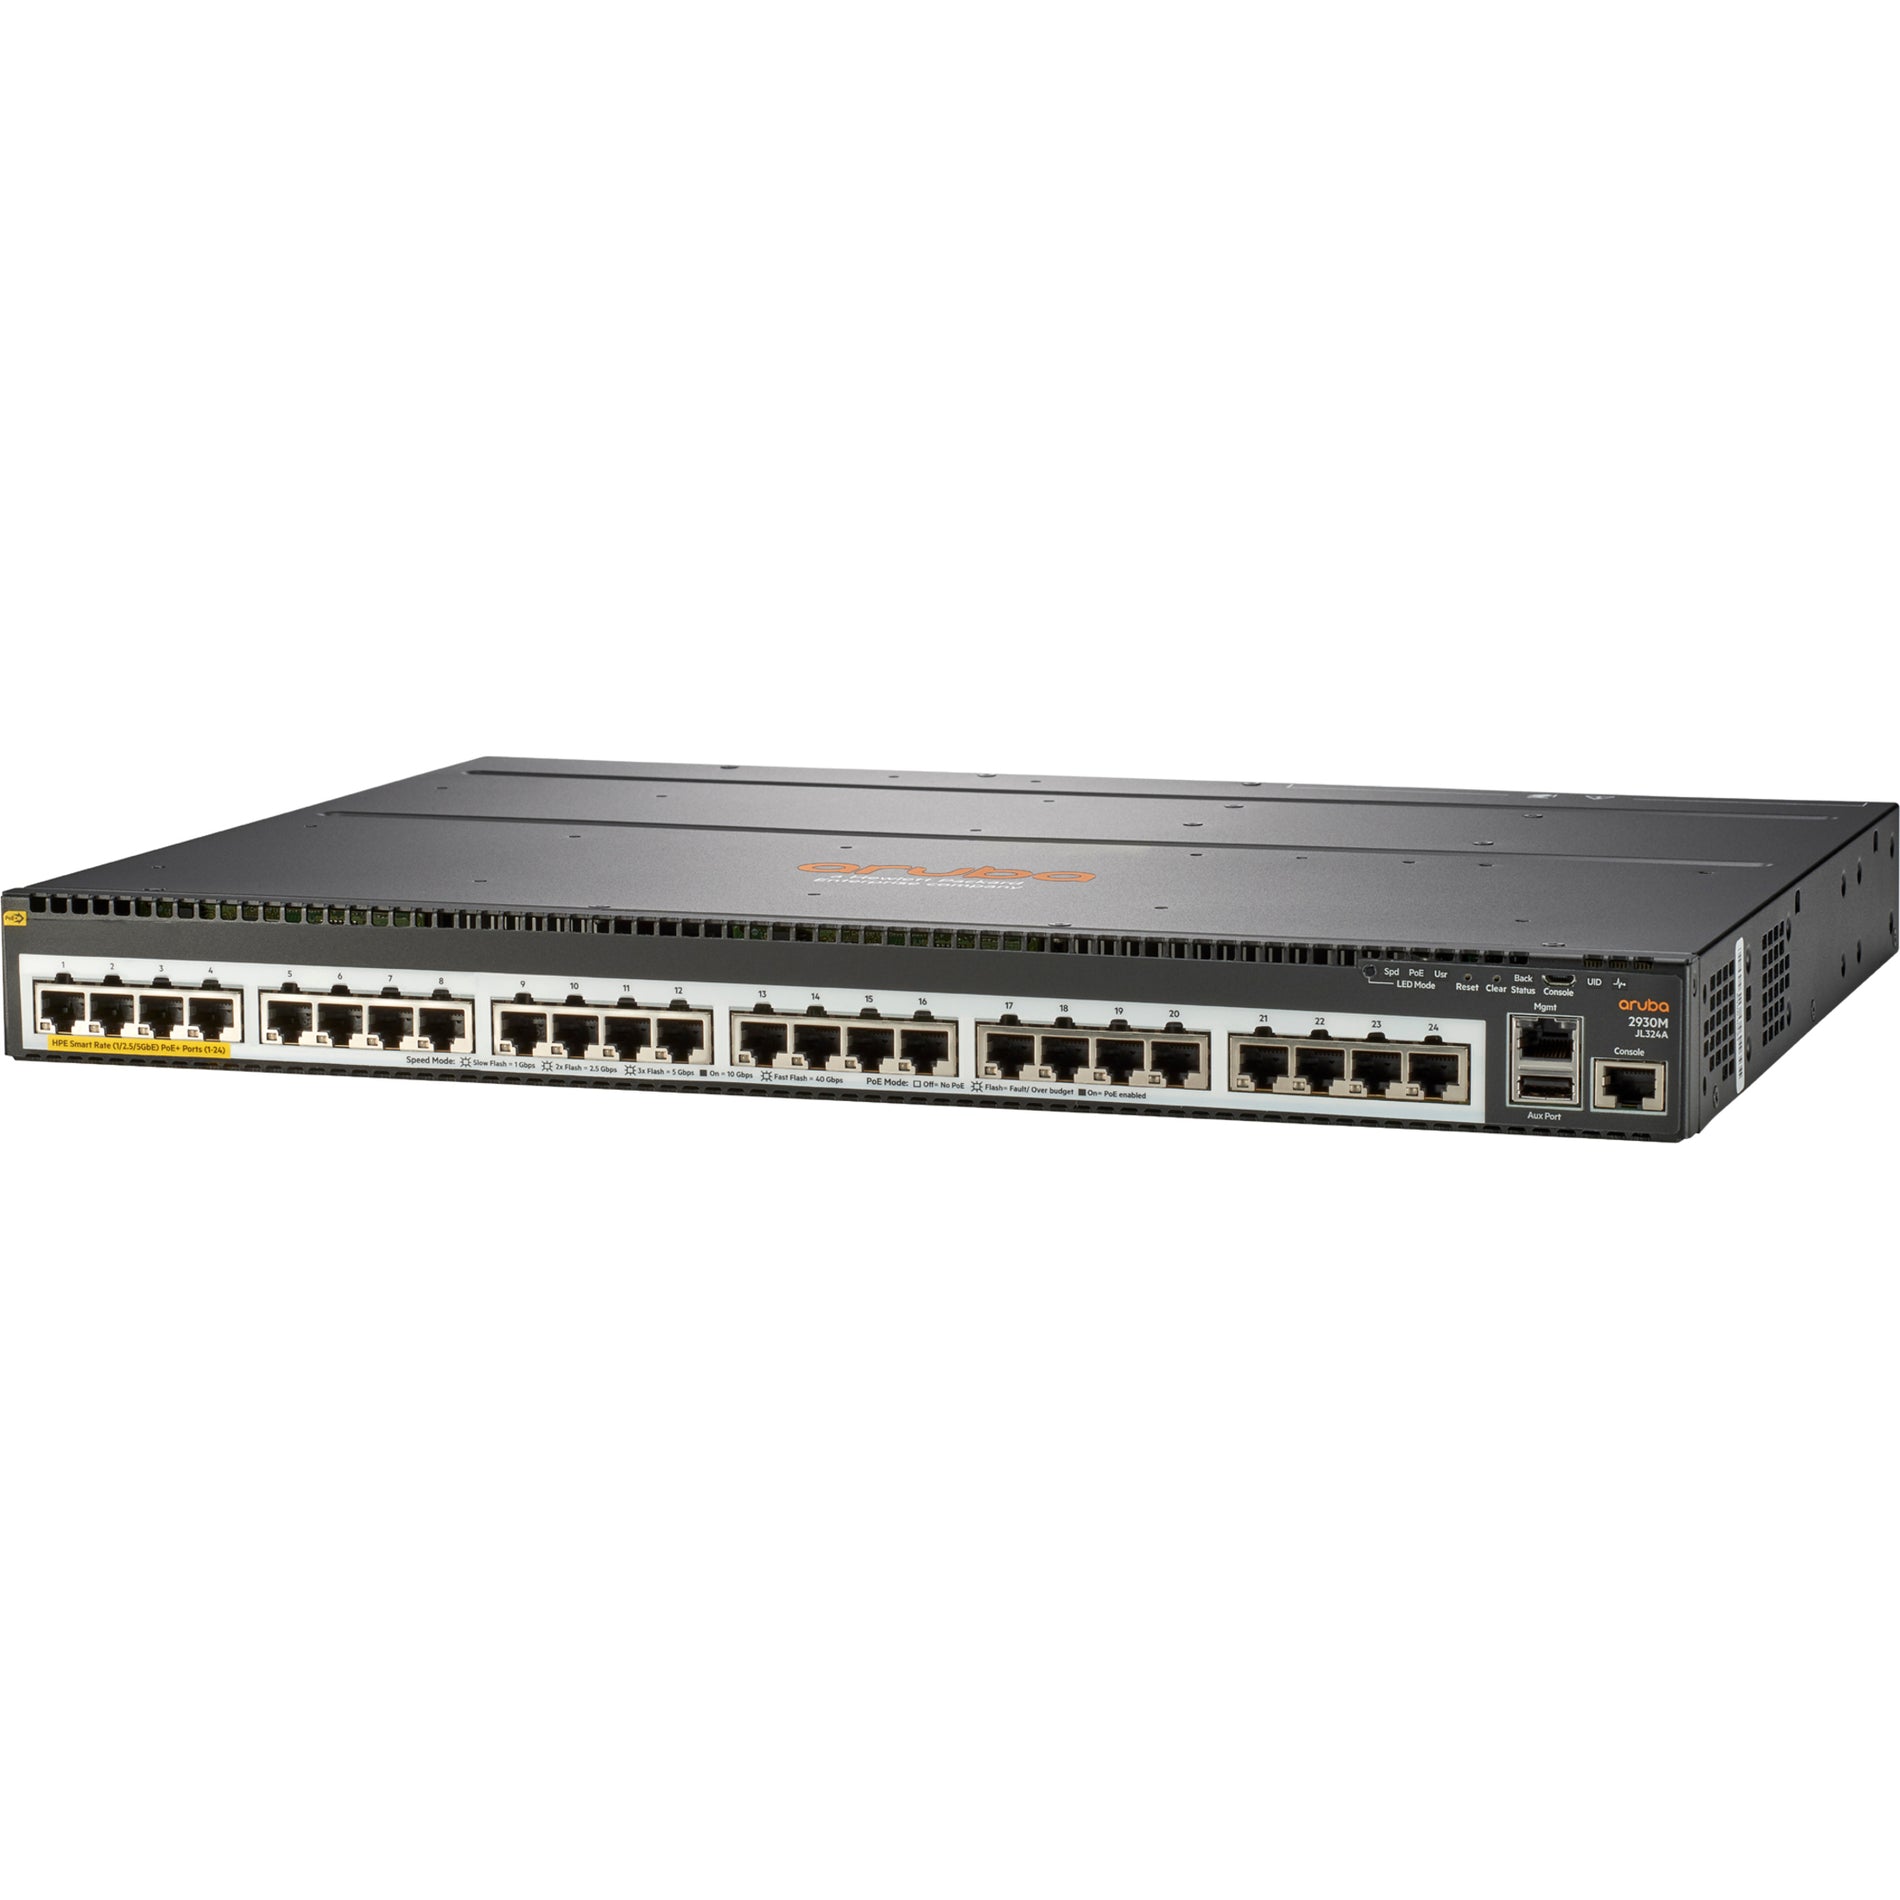 Aruba JL324A 2930M 24 HPE Smart Rate PoE+ 1-slot Switch, 24 x 5 Gigabit Ethernet Network, Stackable, Uplink Port Supported